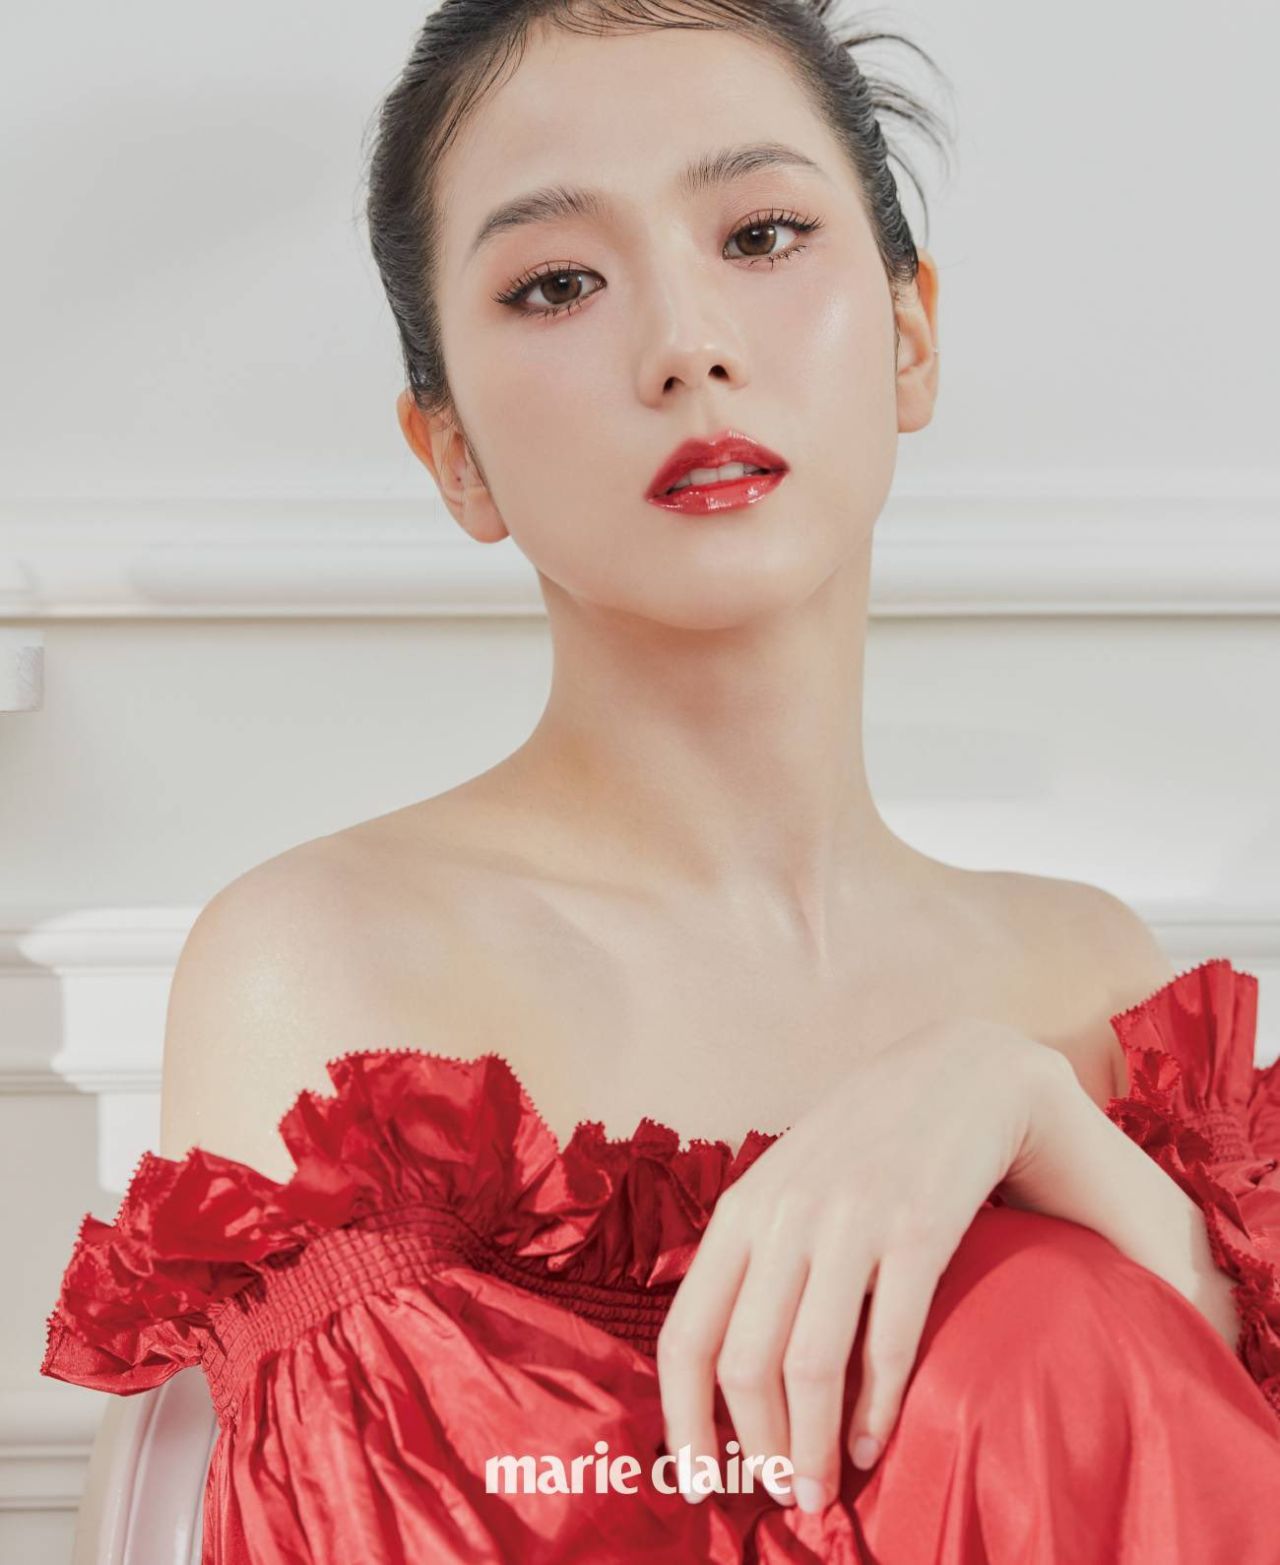 JISOO x Dior Beauty for Marie Claire Korea  BLACKPINK CAFÉ